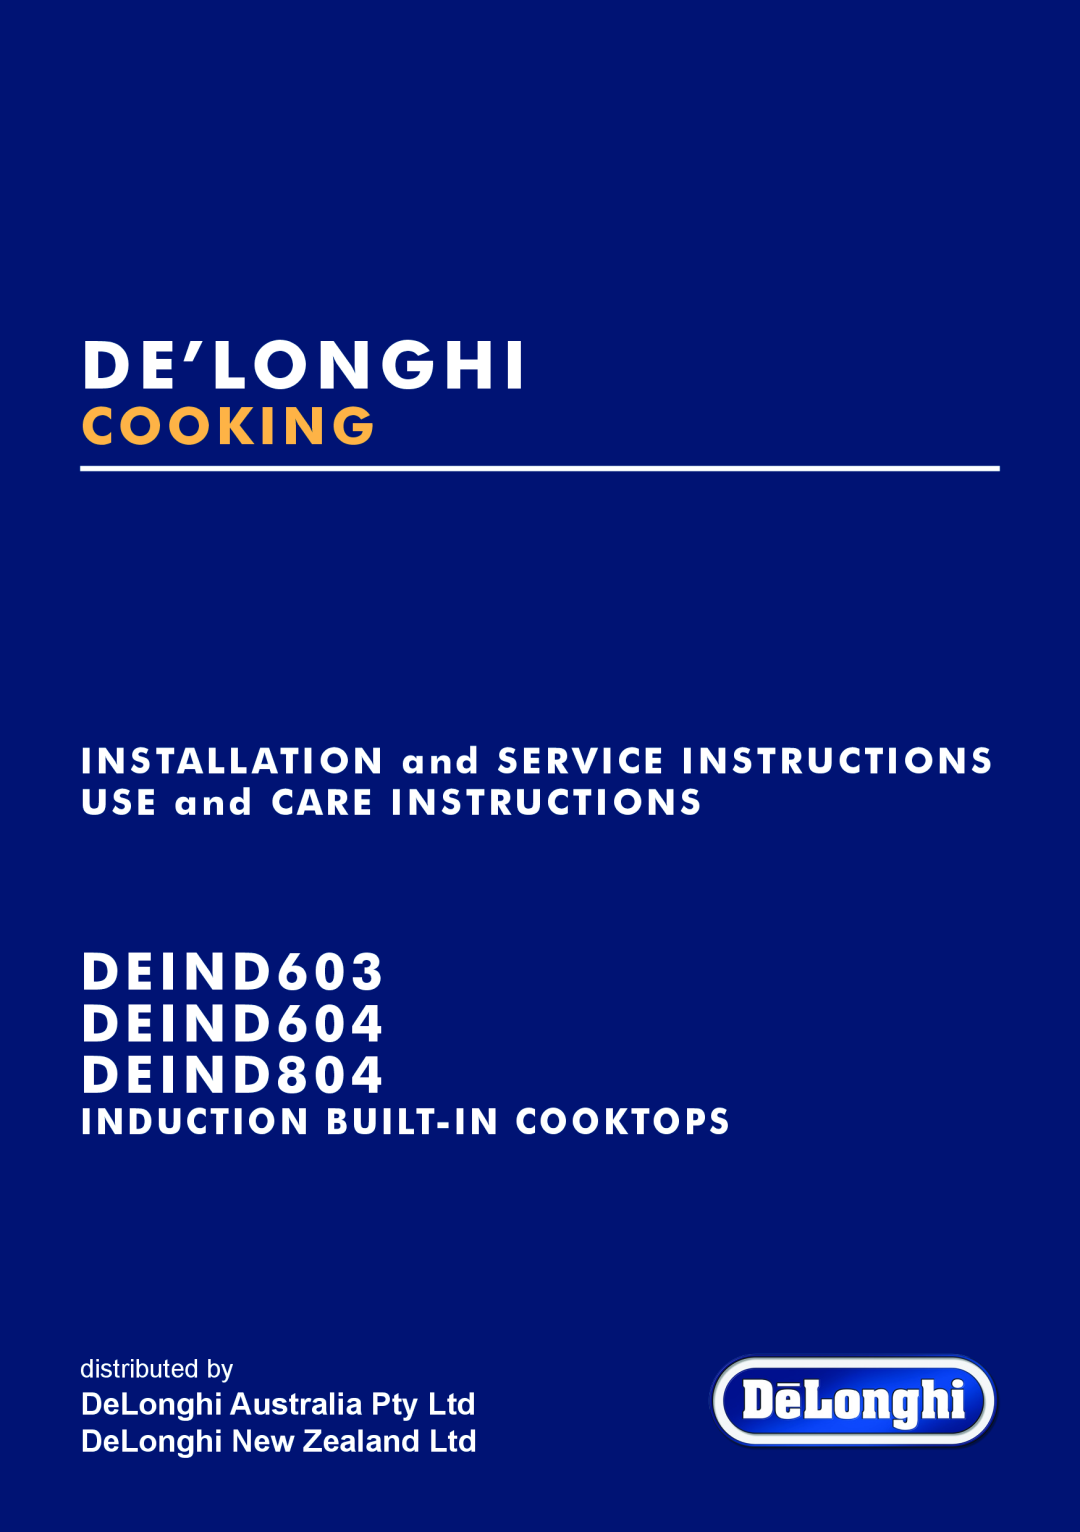 DeLonghi manual Induction Built-Incooktops, De’Longhi, Cooking, DEIND603 DEIND604 DEIND804, distributed by 